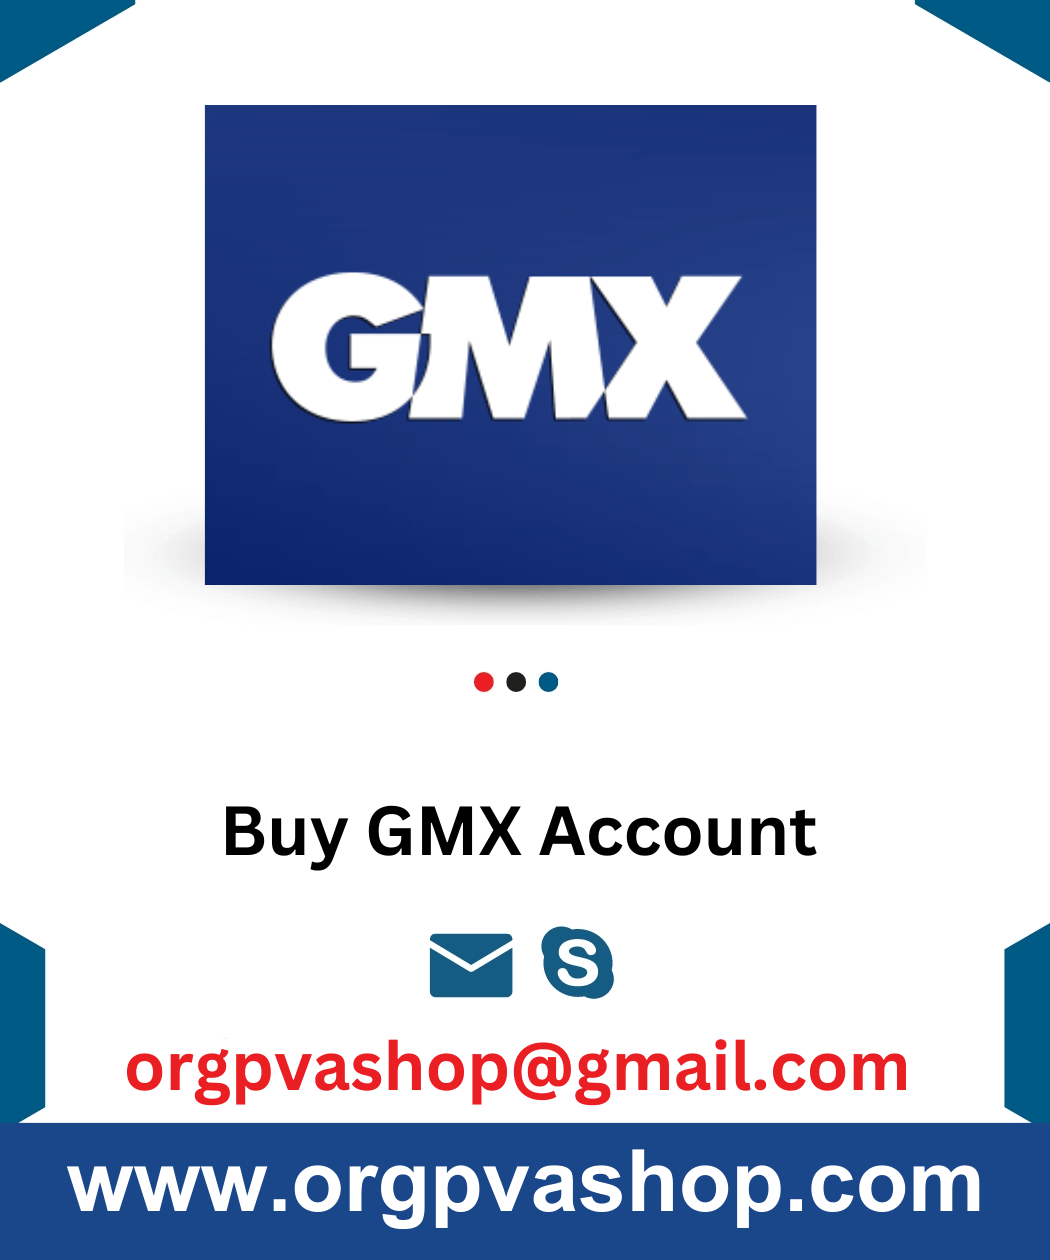 Aged GMX.com accounts (2 years old)